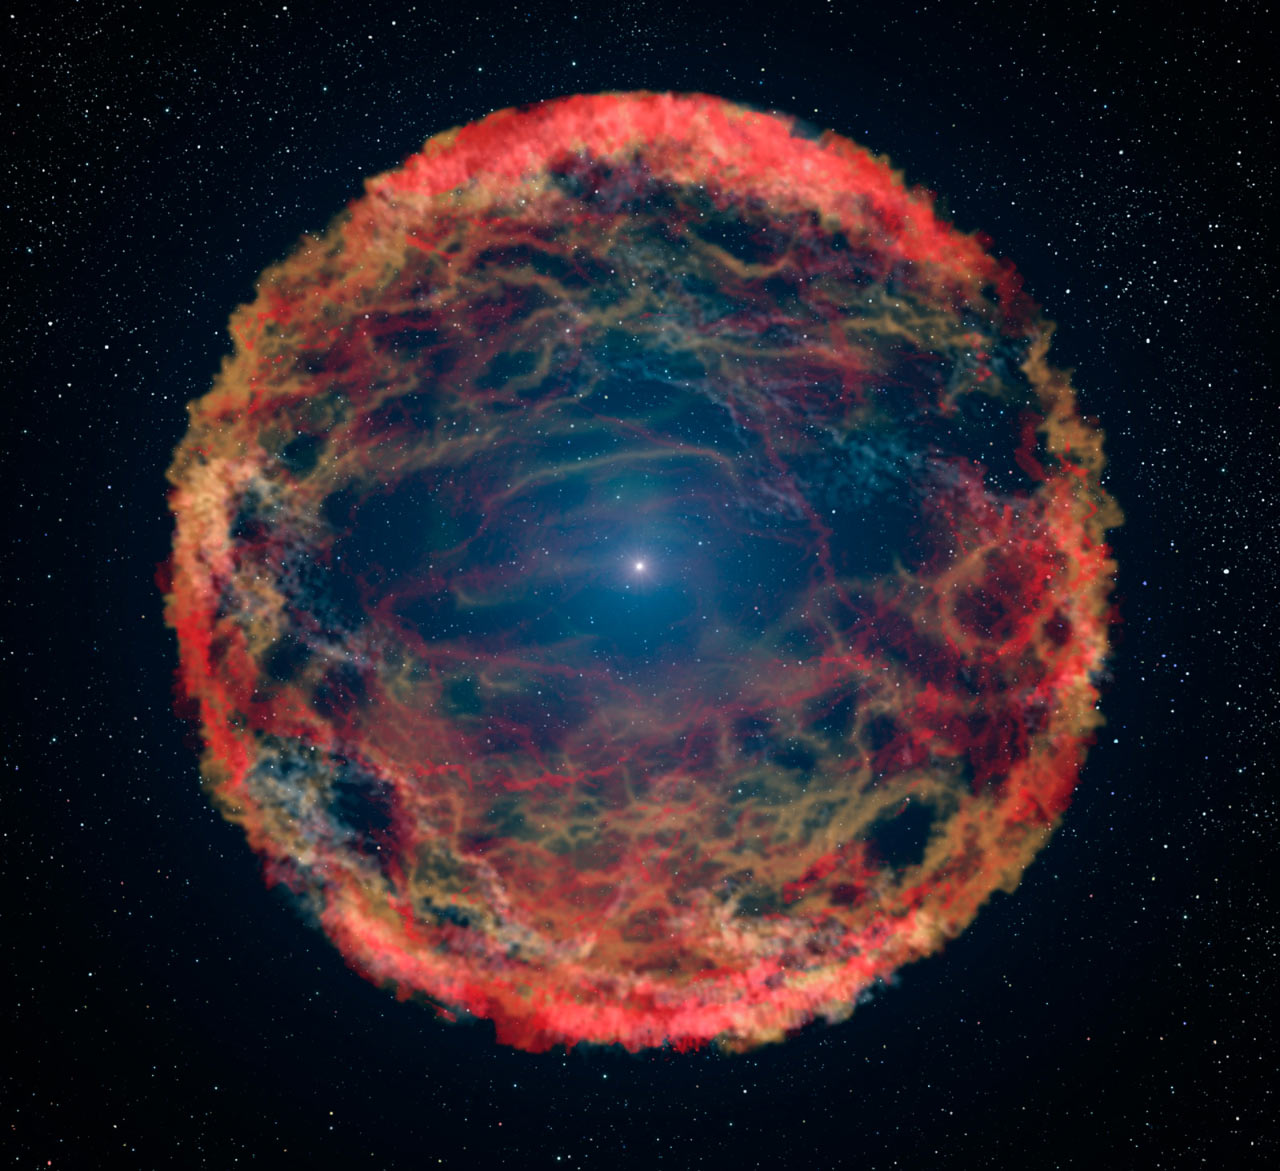 Image - An artist’s impression a supernova. (Credit: NASA/ESA/G. Bacon, STScI)